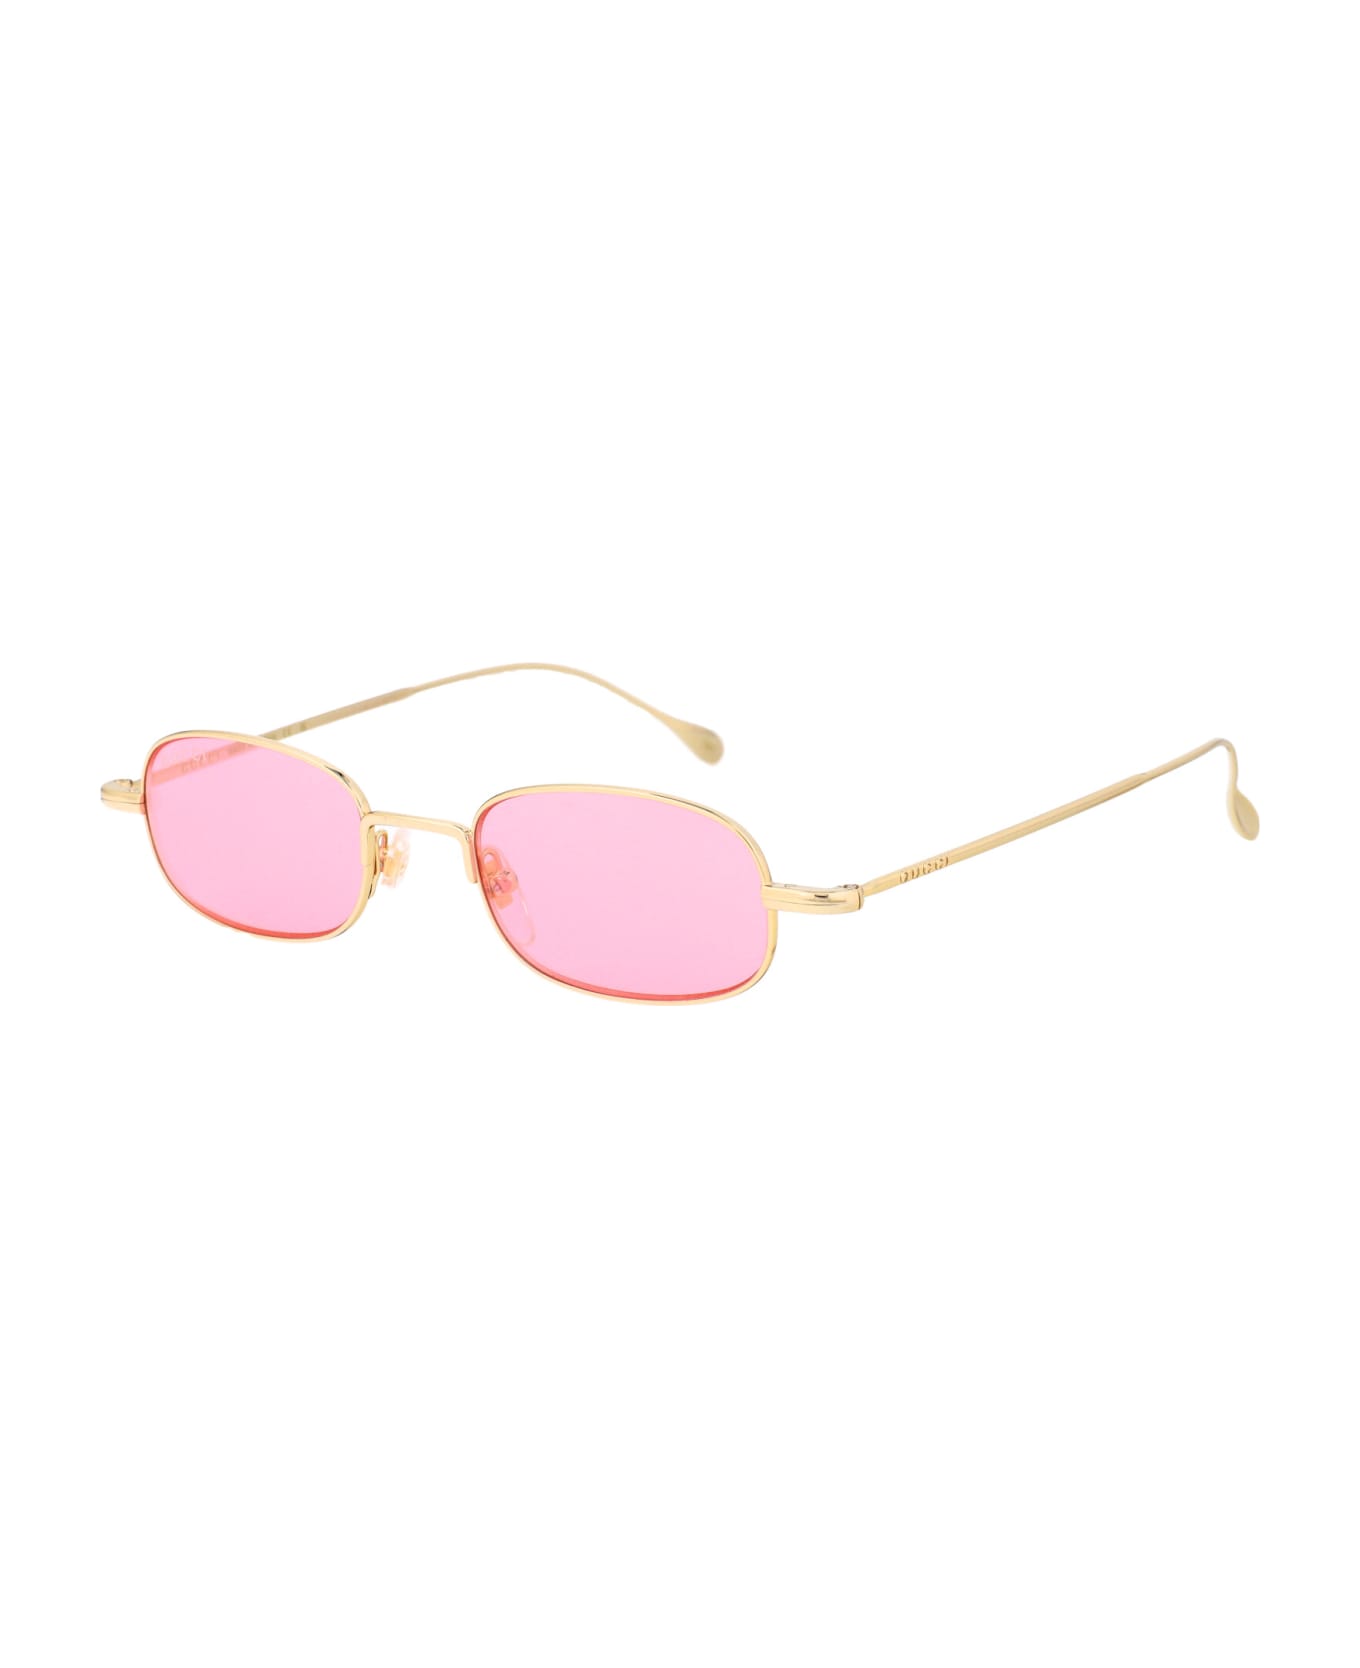 Gucci Eyewear Gg1648s Sunglasses - 005 GOLD GOLD PINK サングラス